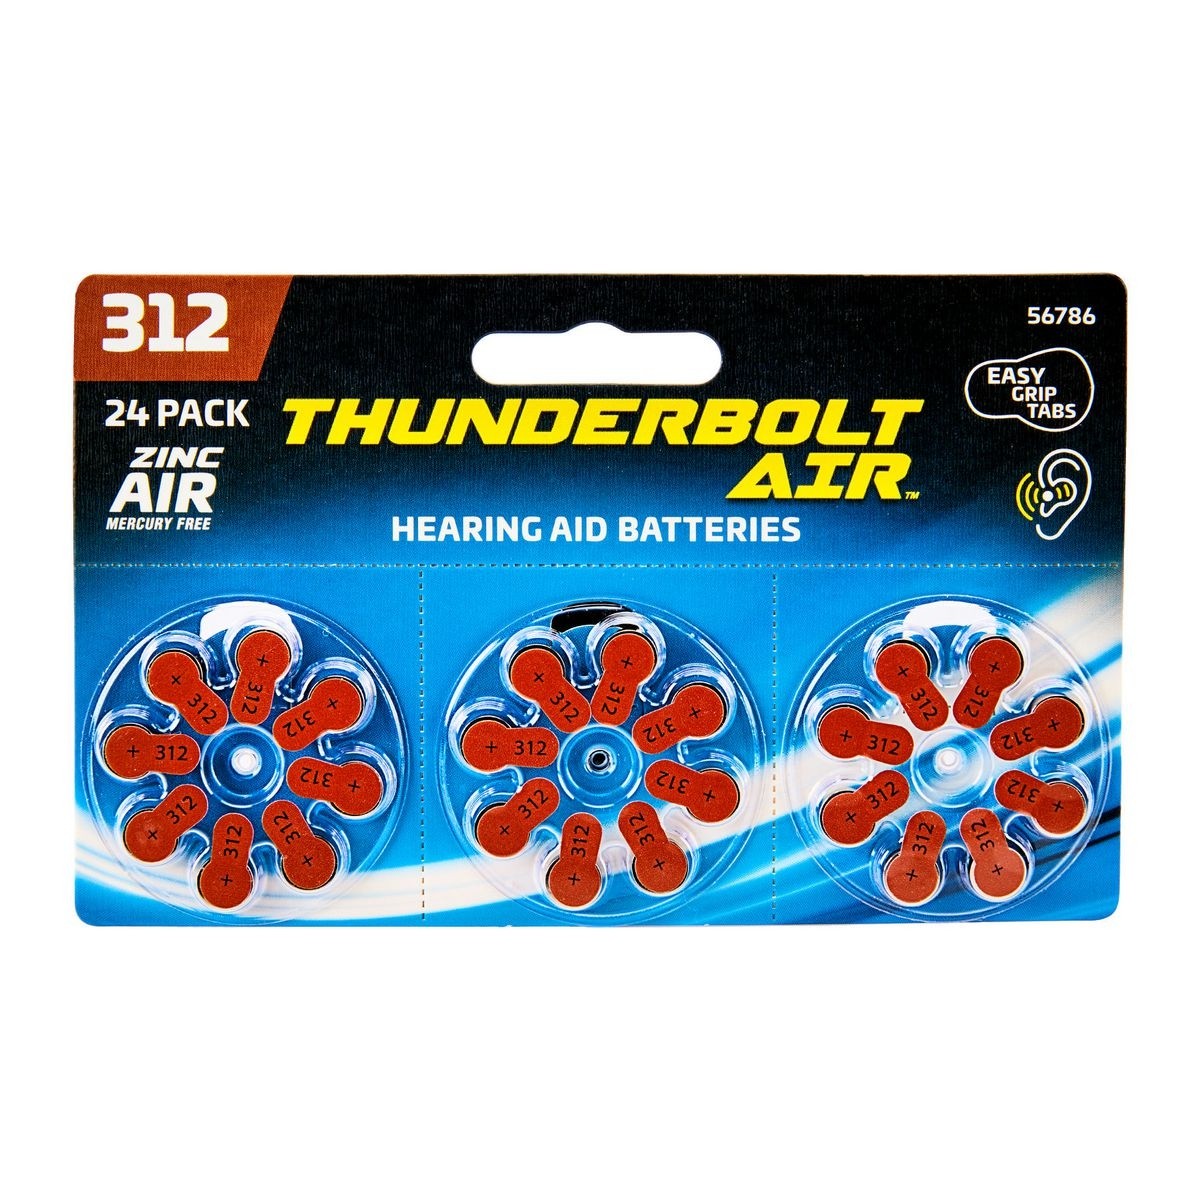 THUNDERBOLT A312 Hearing Aid Batteries - 24 Pk. – Item 56786